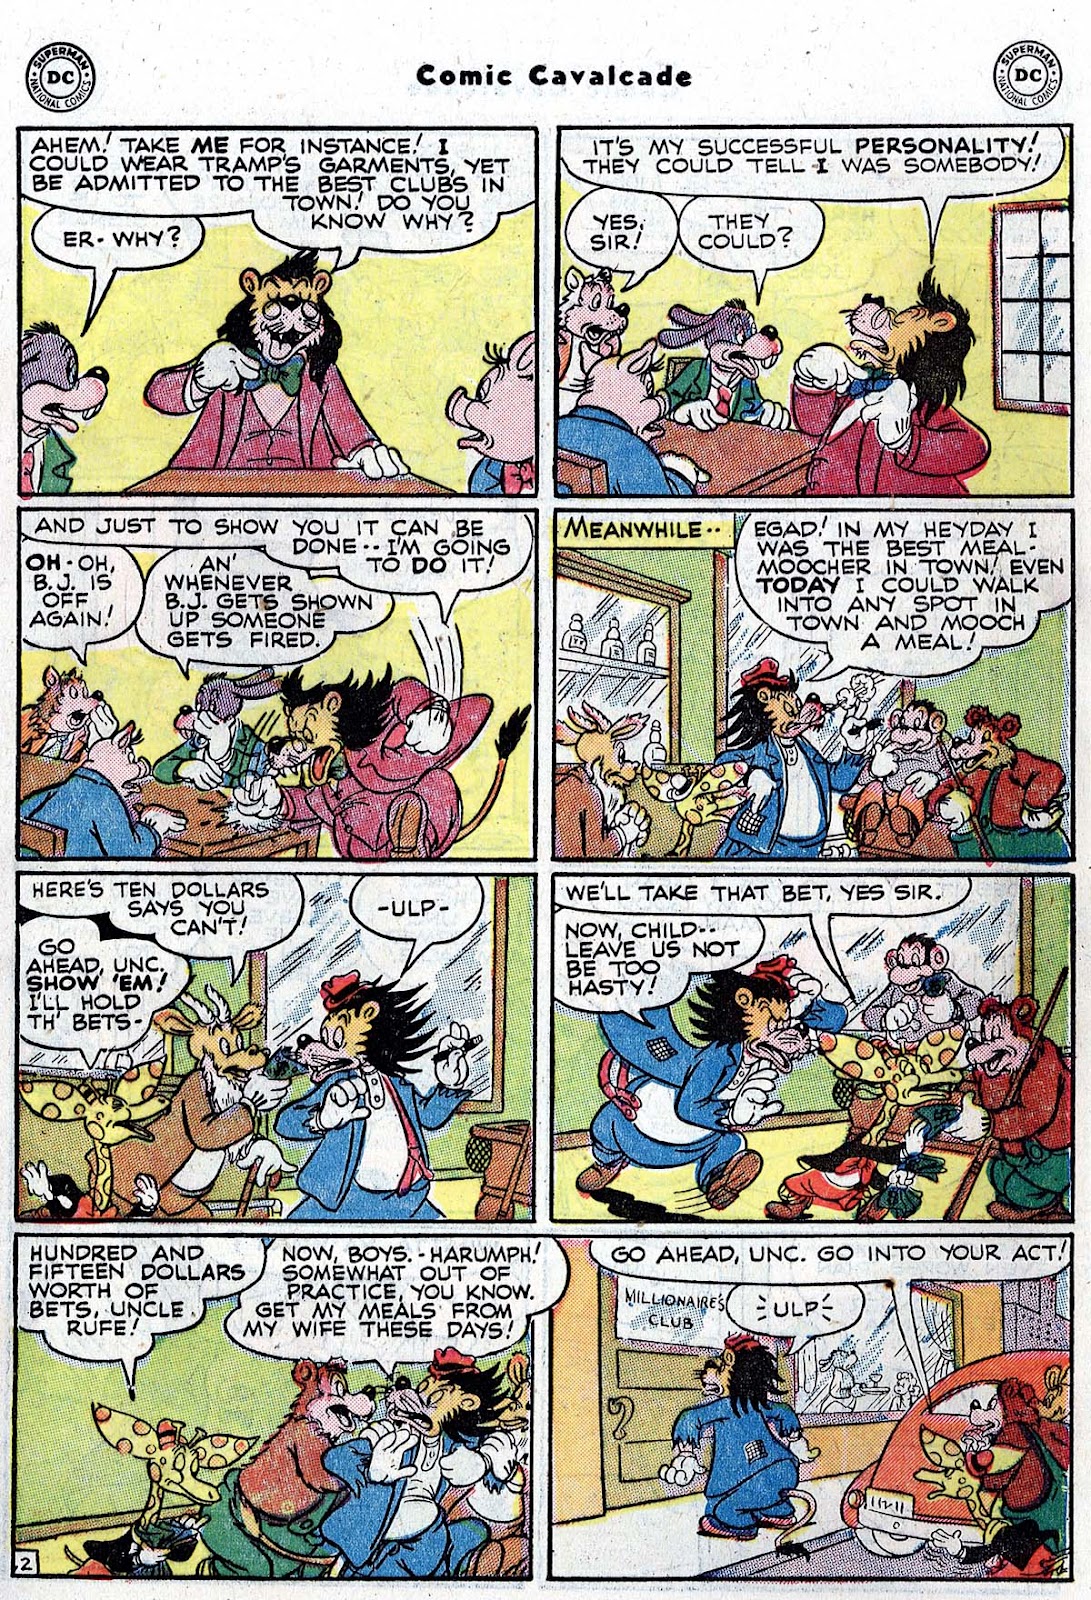 Comic Cavalcade issue 58 - Page 17